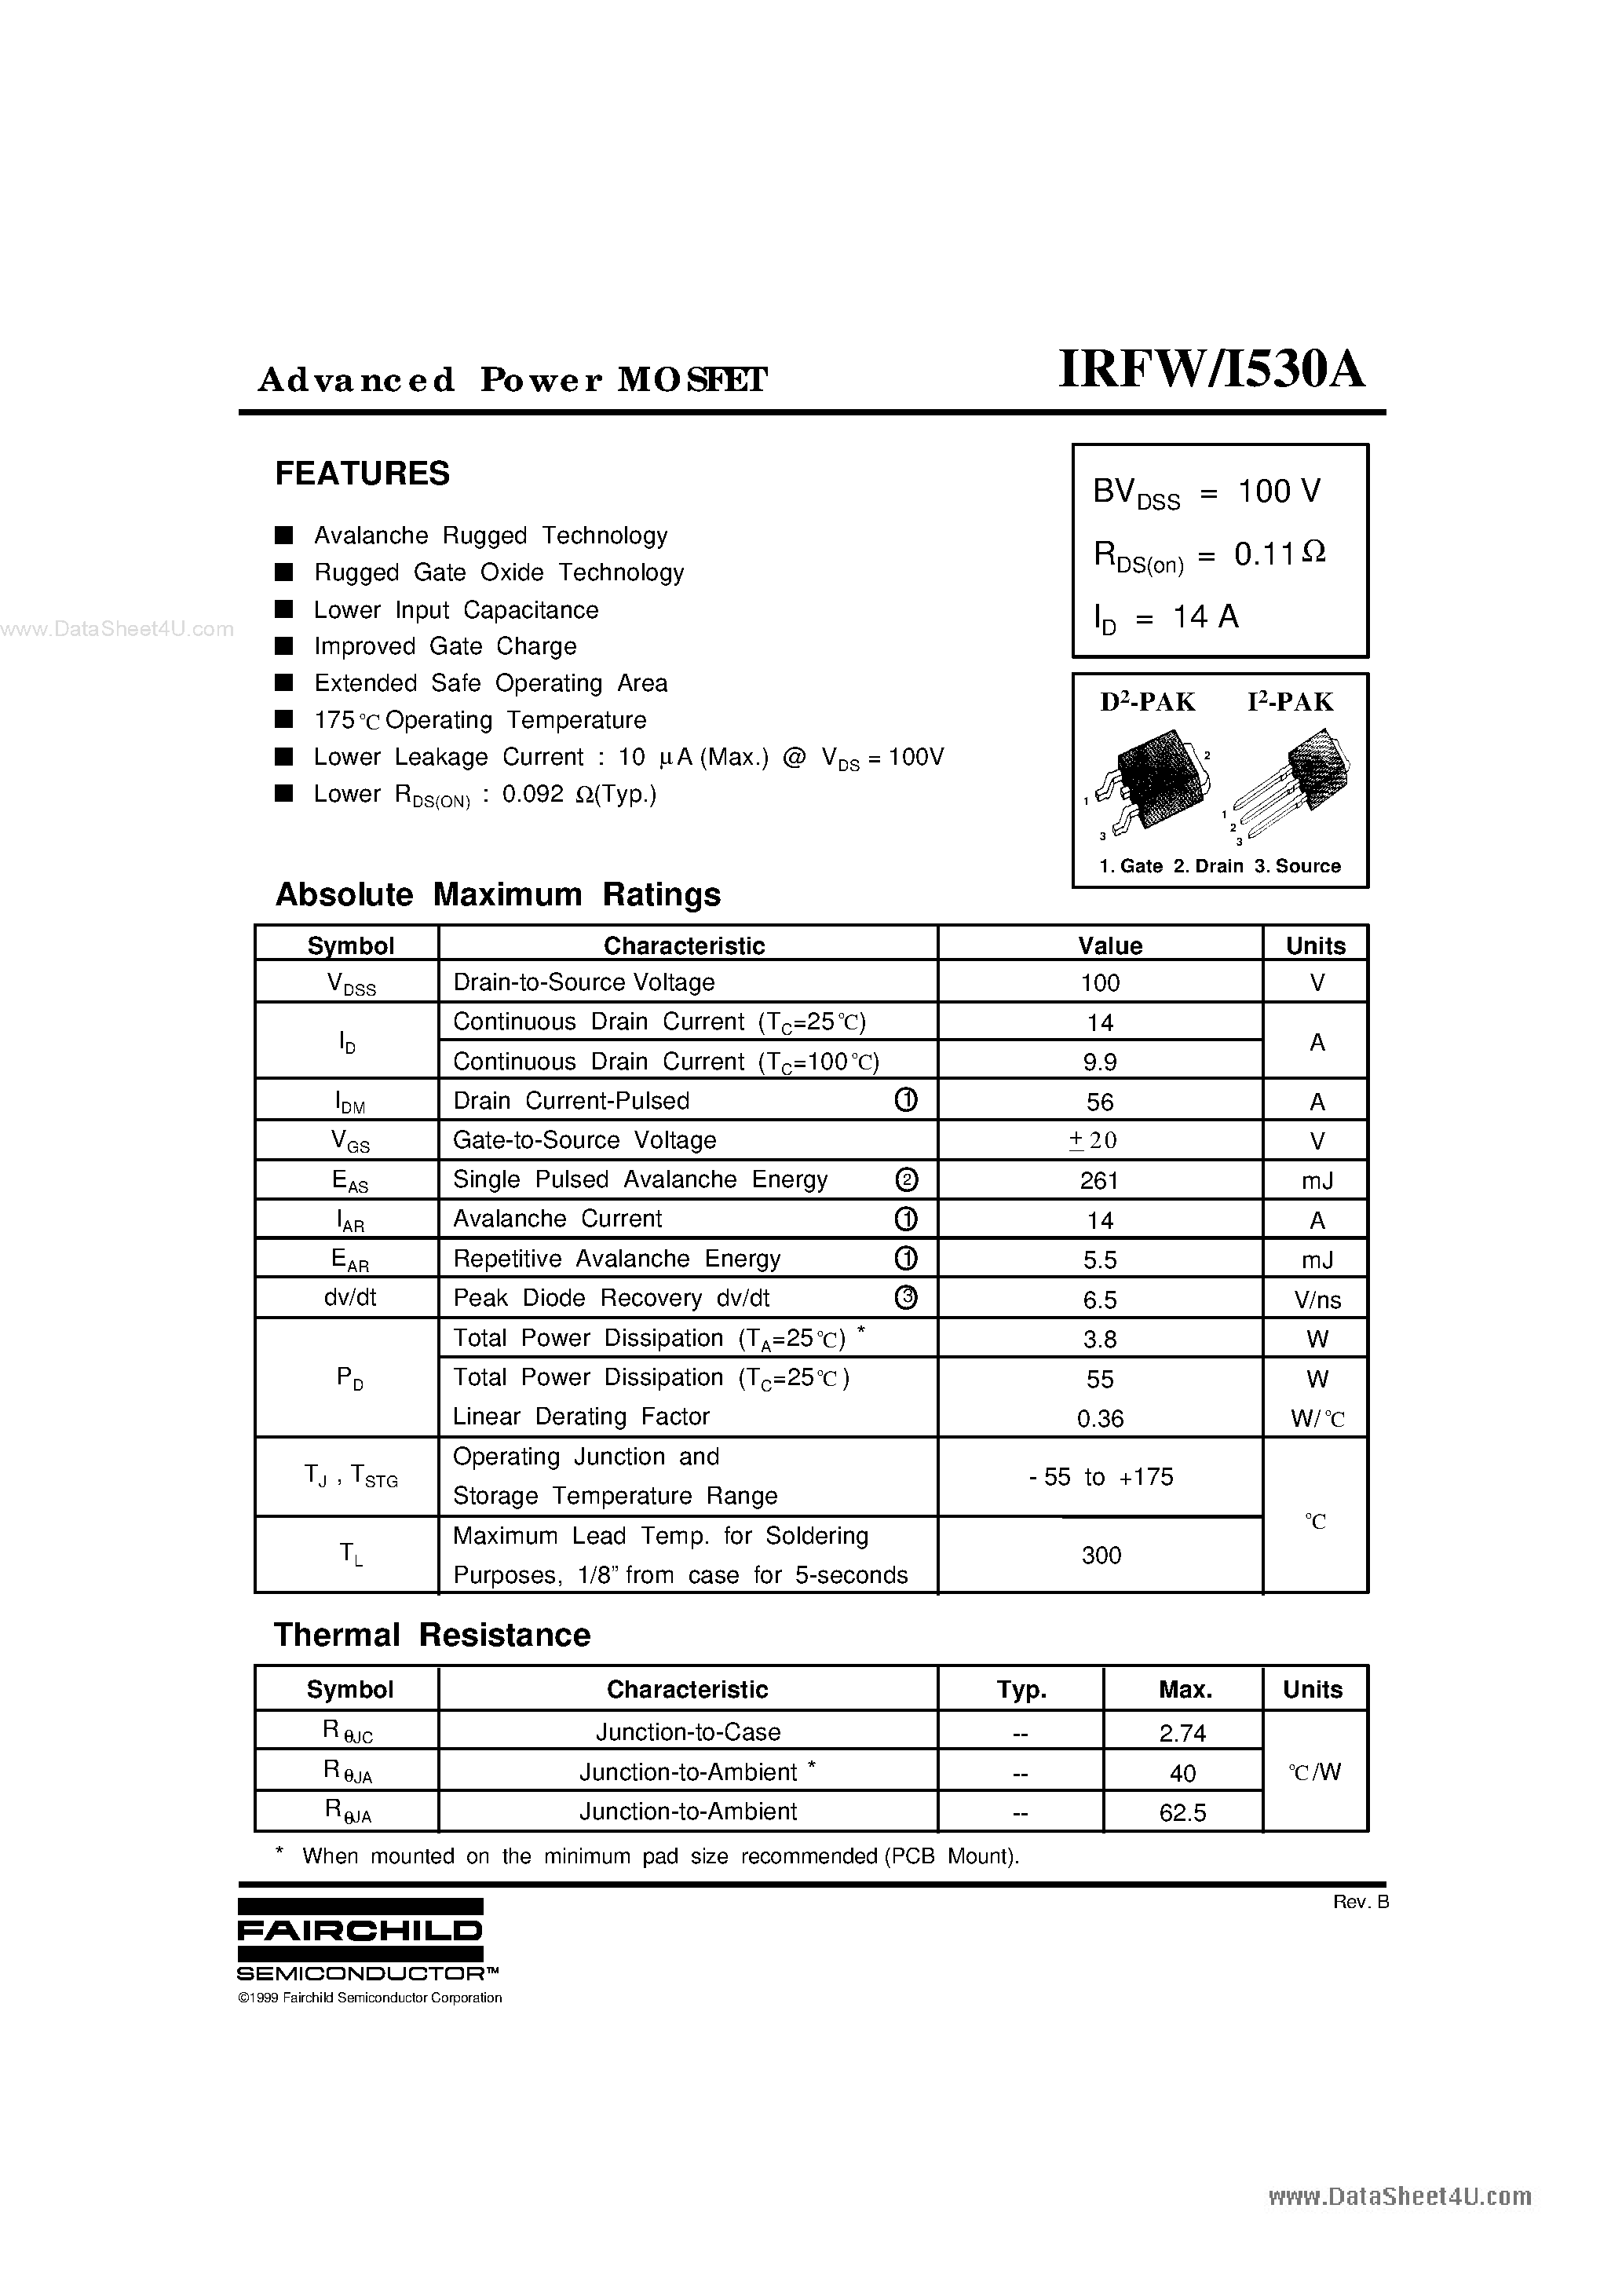 Datasheet IRFI530A - Advanced Power MOSFET page 1